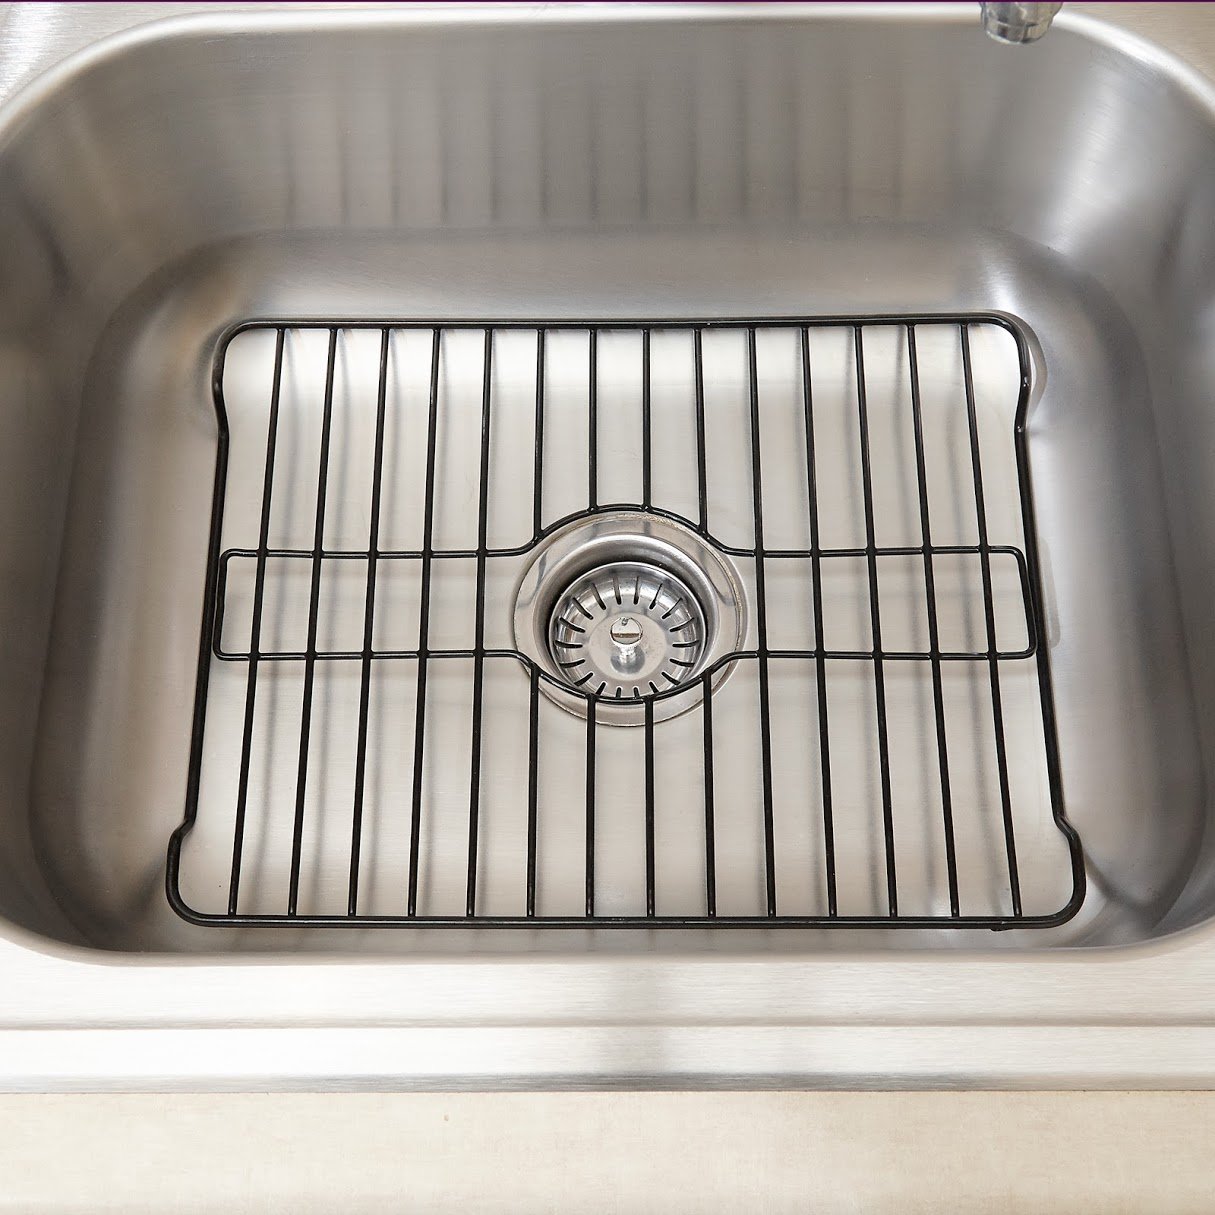 Better Houseware Large Sink Protector (Black)